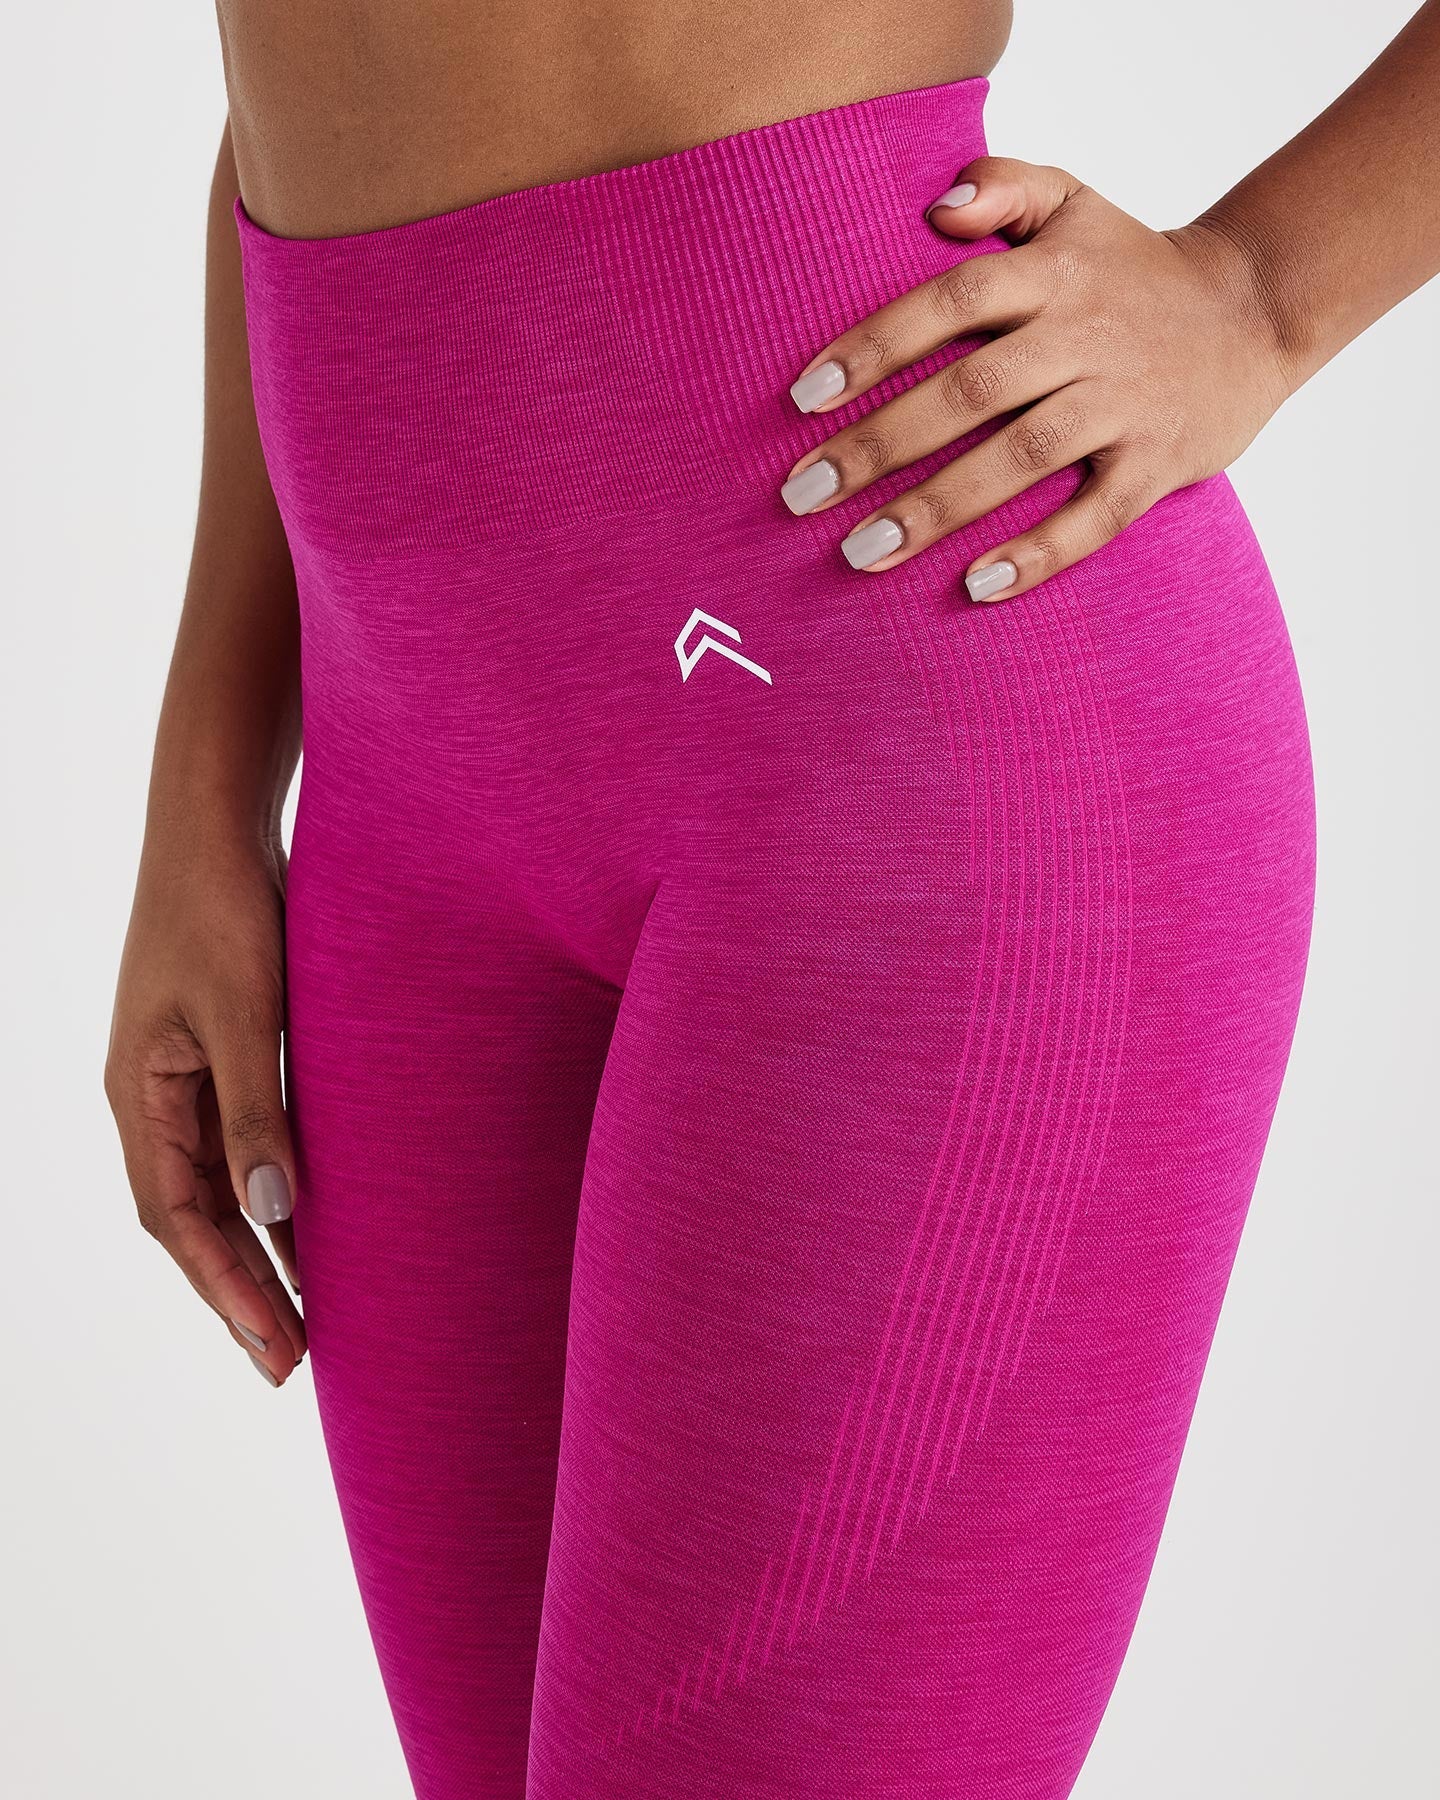 ACTIVE LIFE Women's Fuchsia Pants Small S Pink Purple Reversible Leggings  NWT